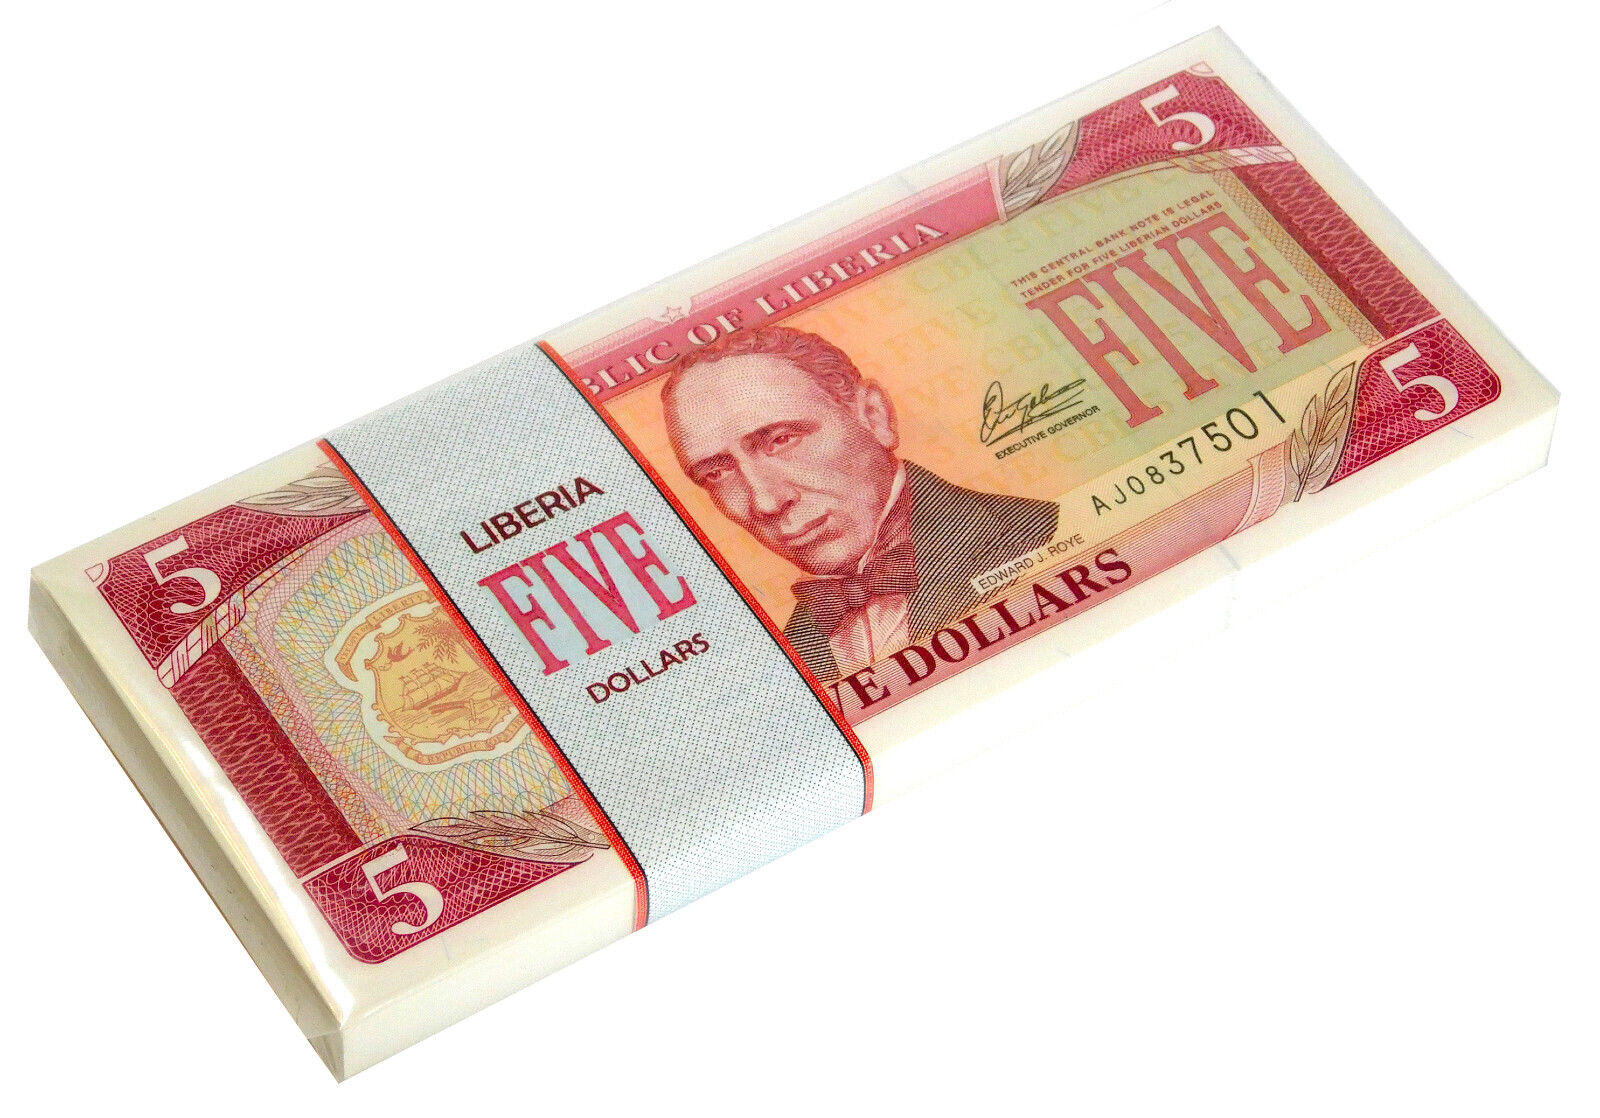 Liberia 5 Dollars 2003 P 26 Unc  Bundle Of 100 Notes (100 Pcs)